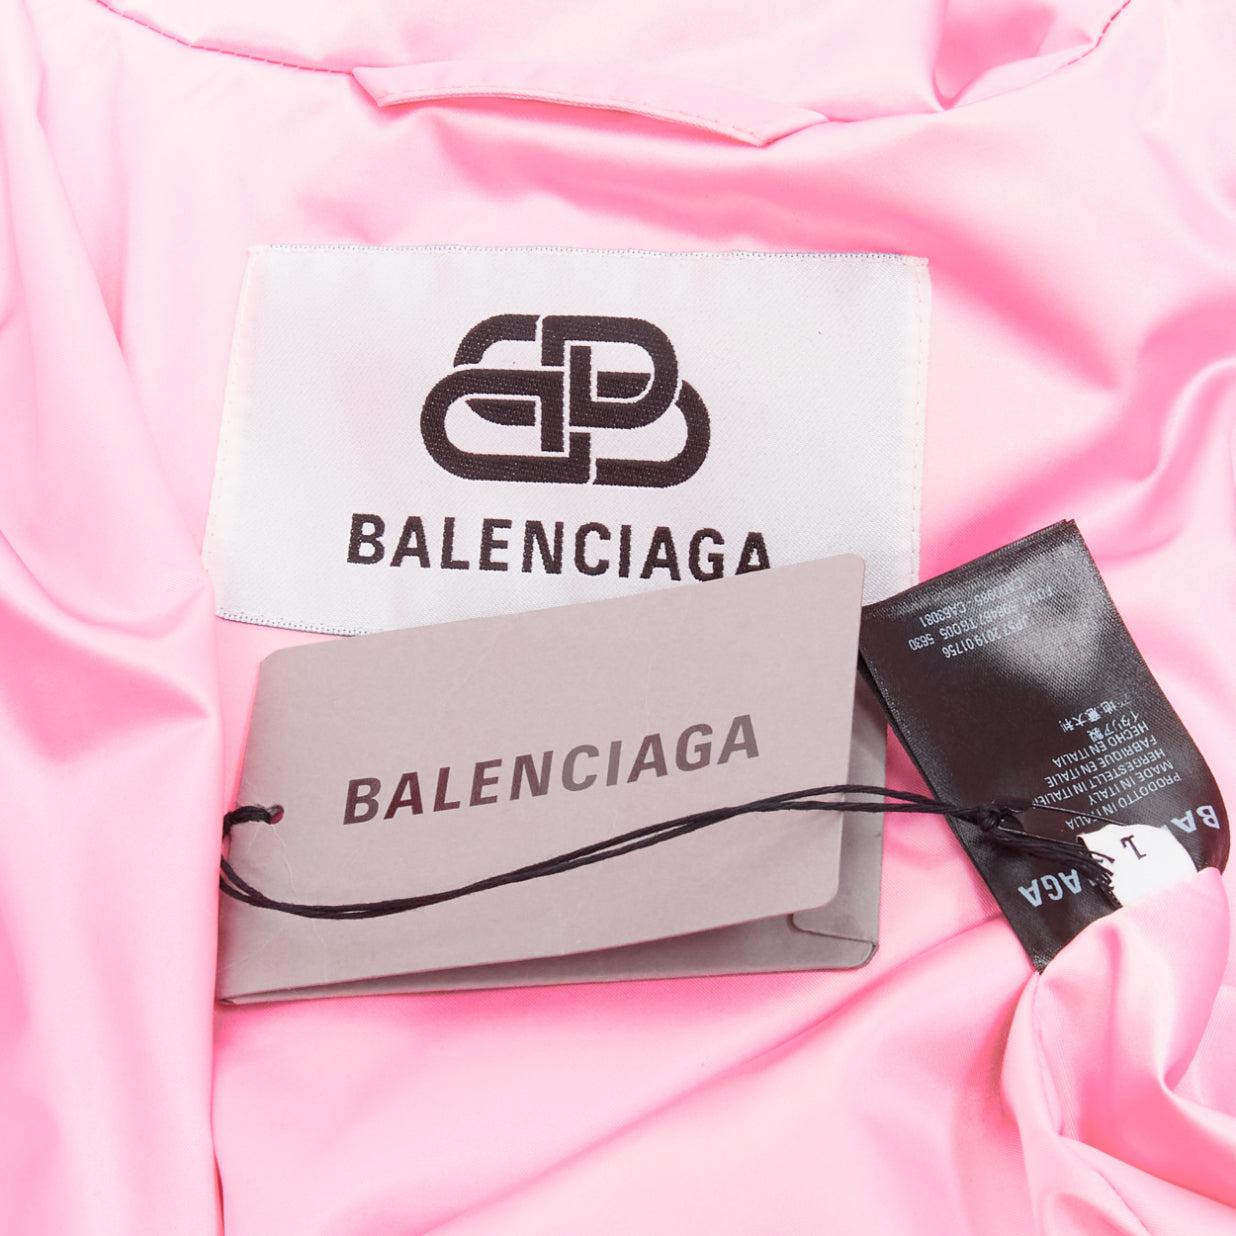 new BALENCIAGA Demna Runway pink nylon satin belted padded puffer coat robe S 2